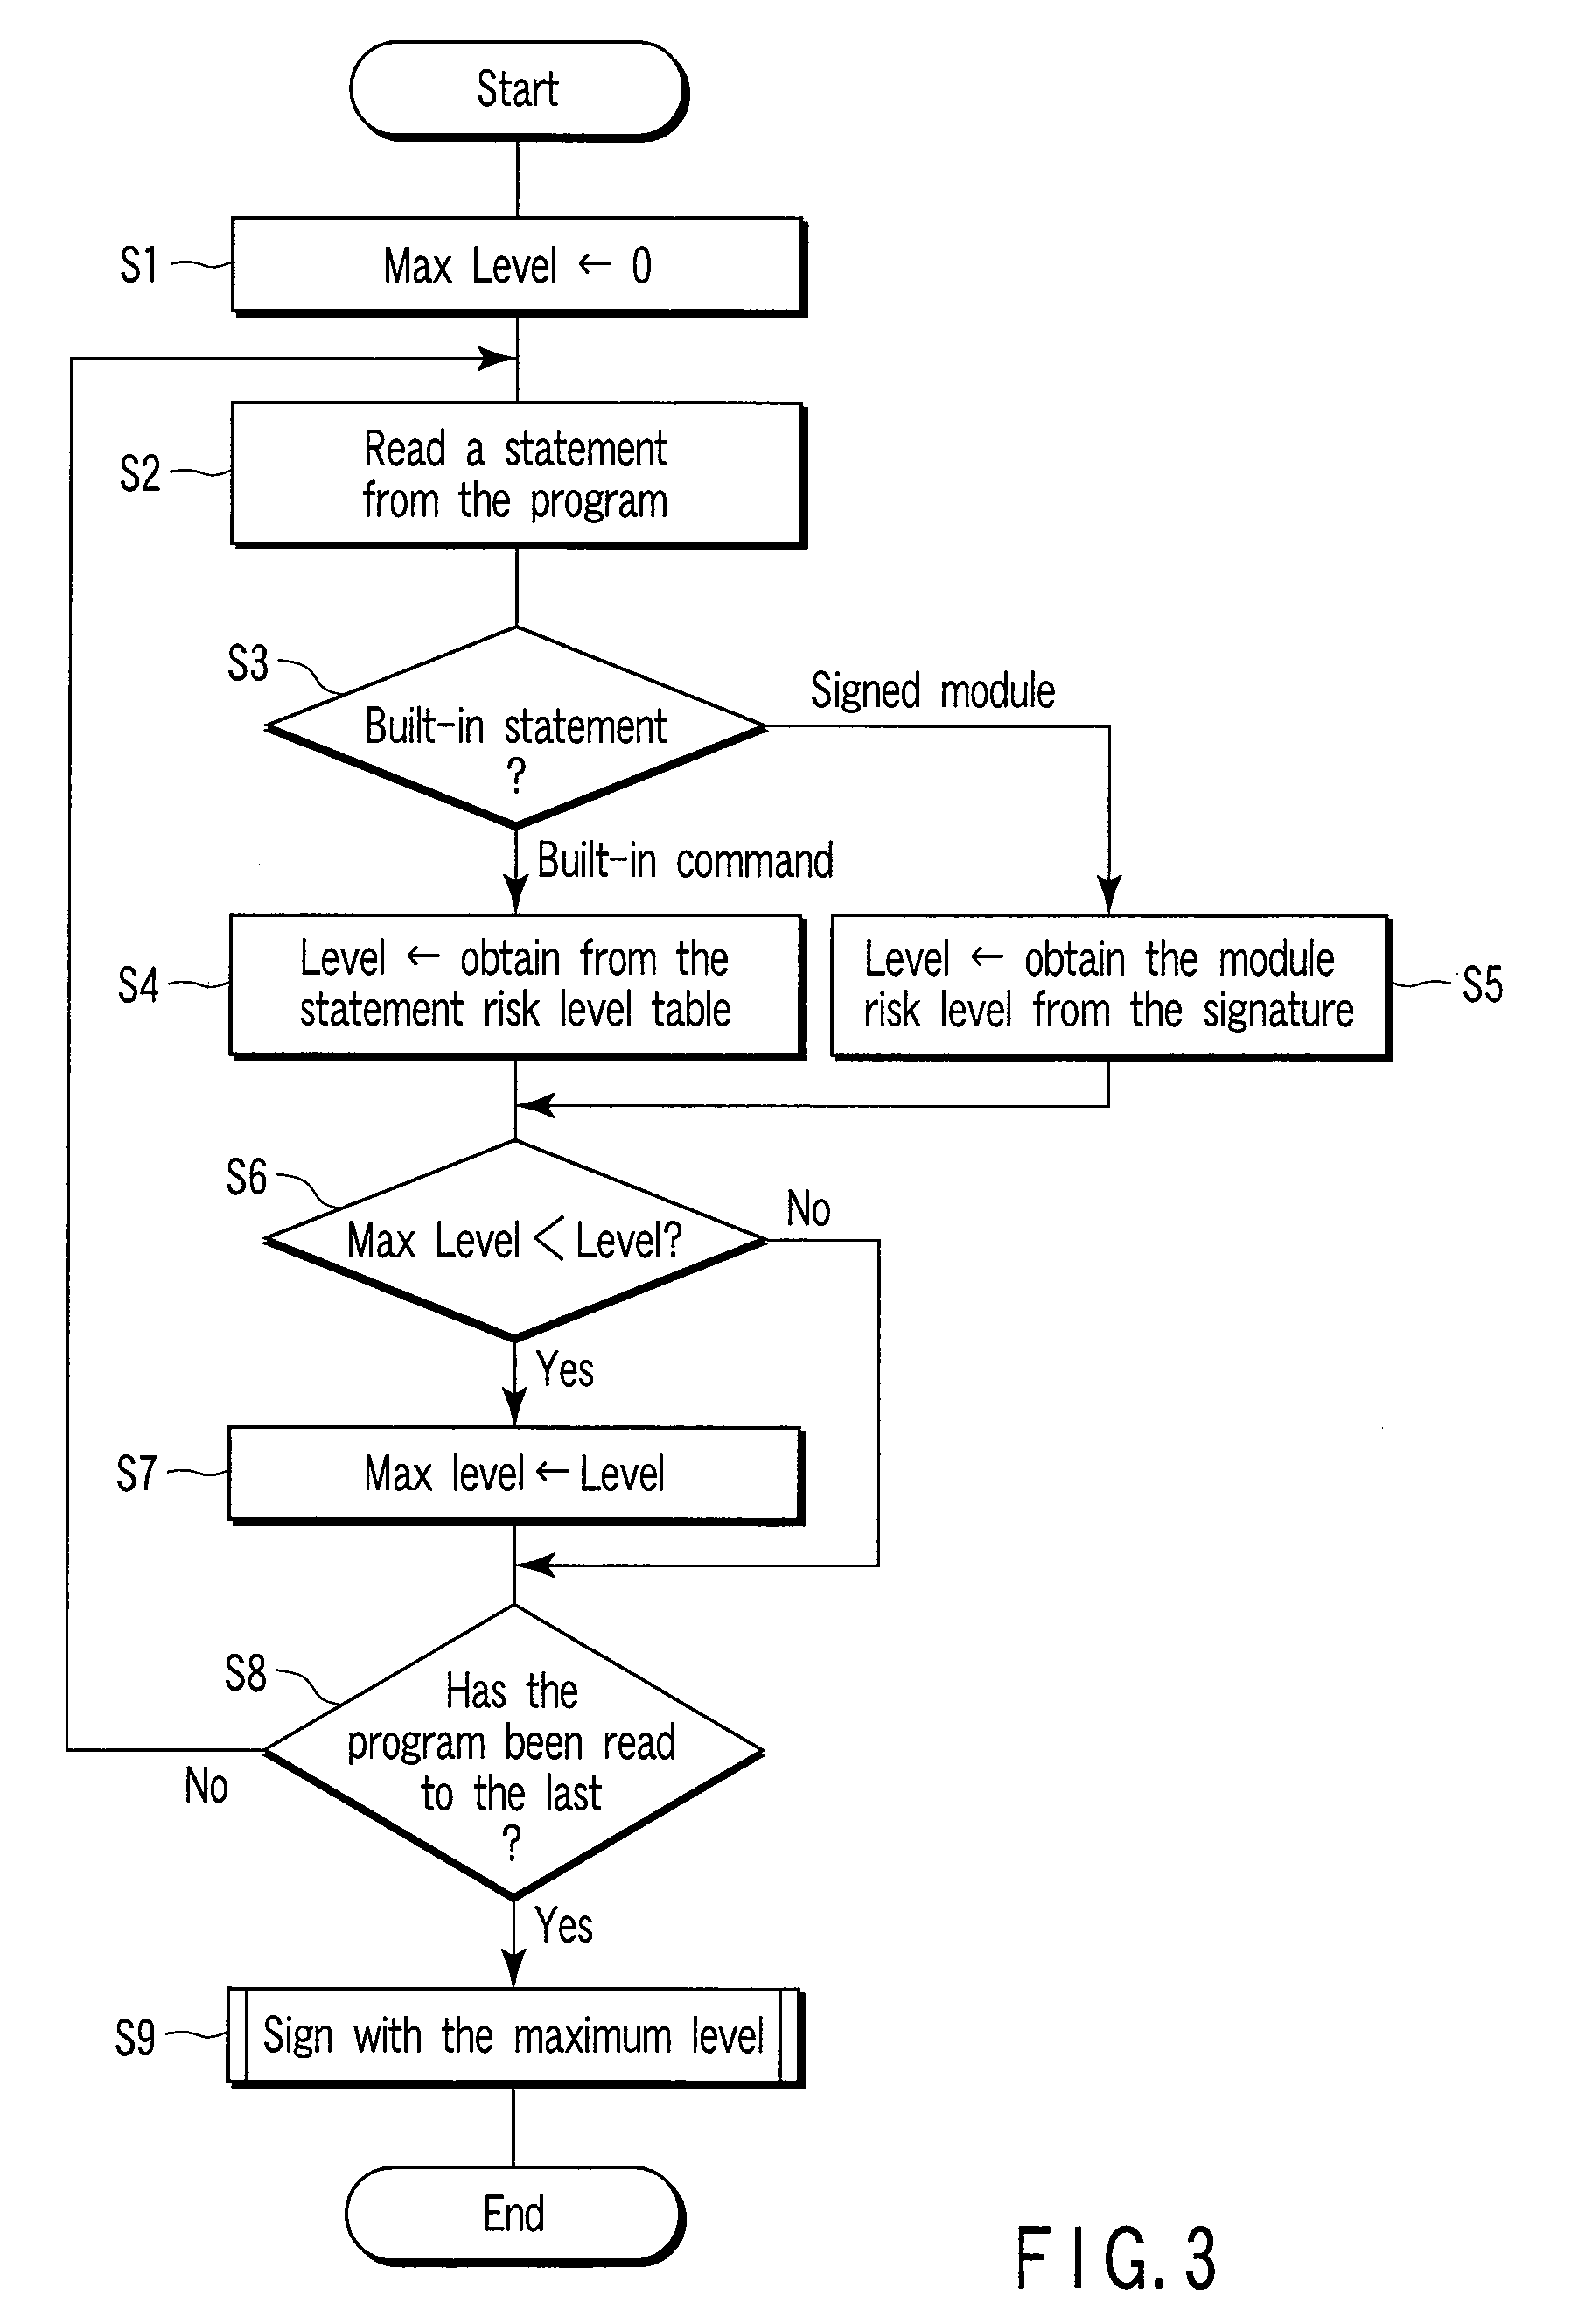 Program verification apparatus and method, and signature system based on program verification